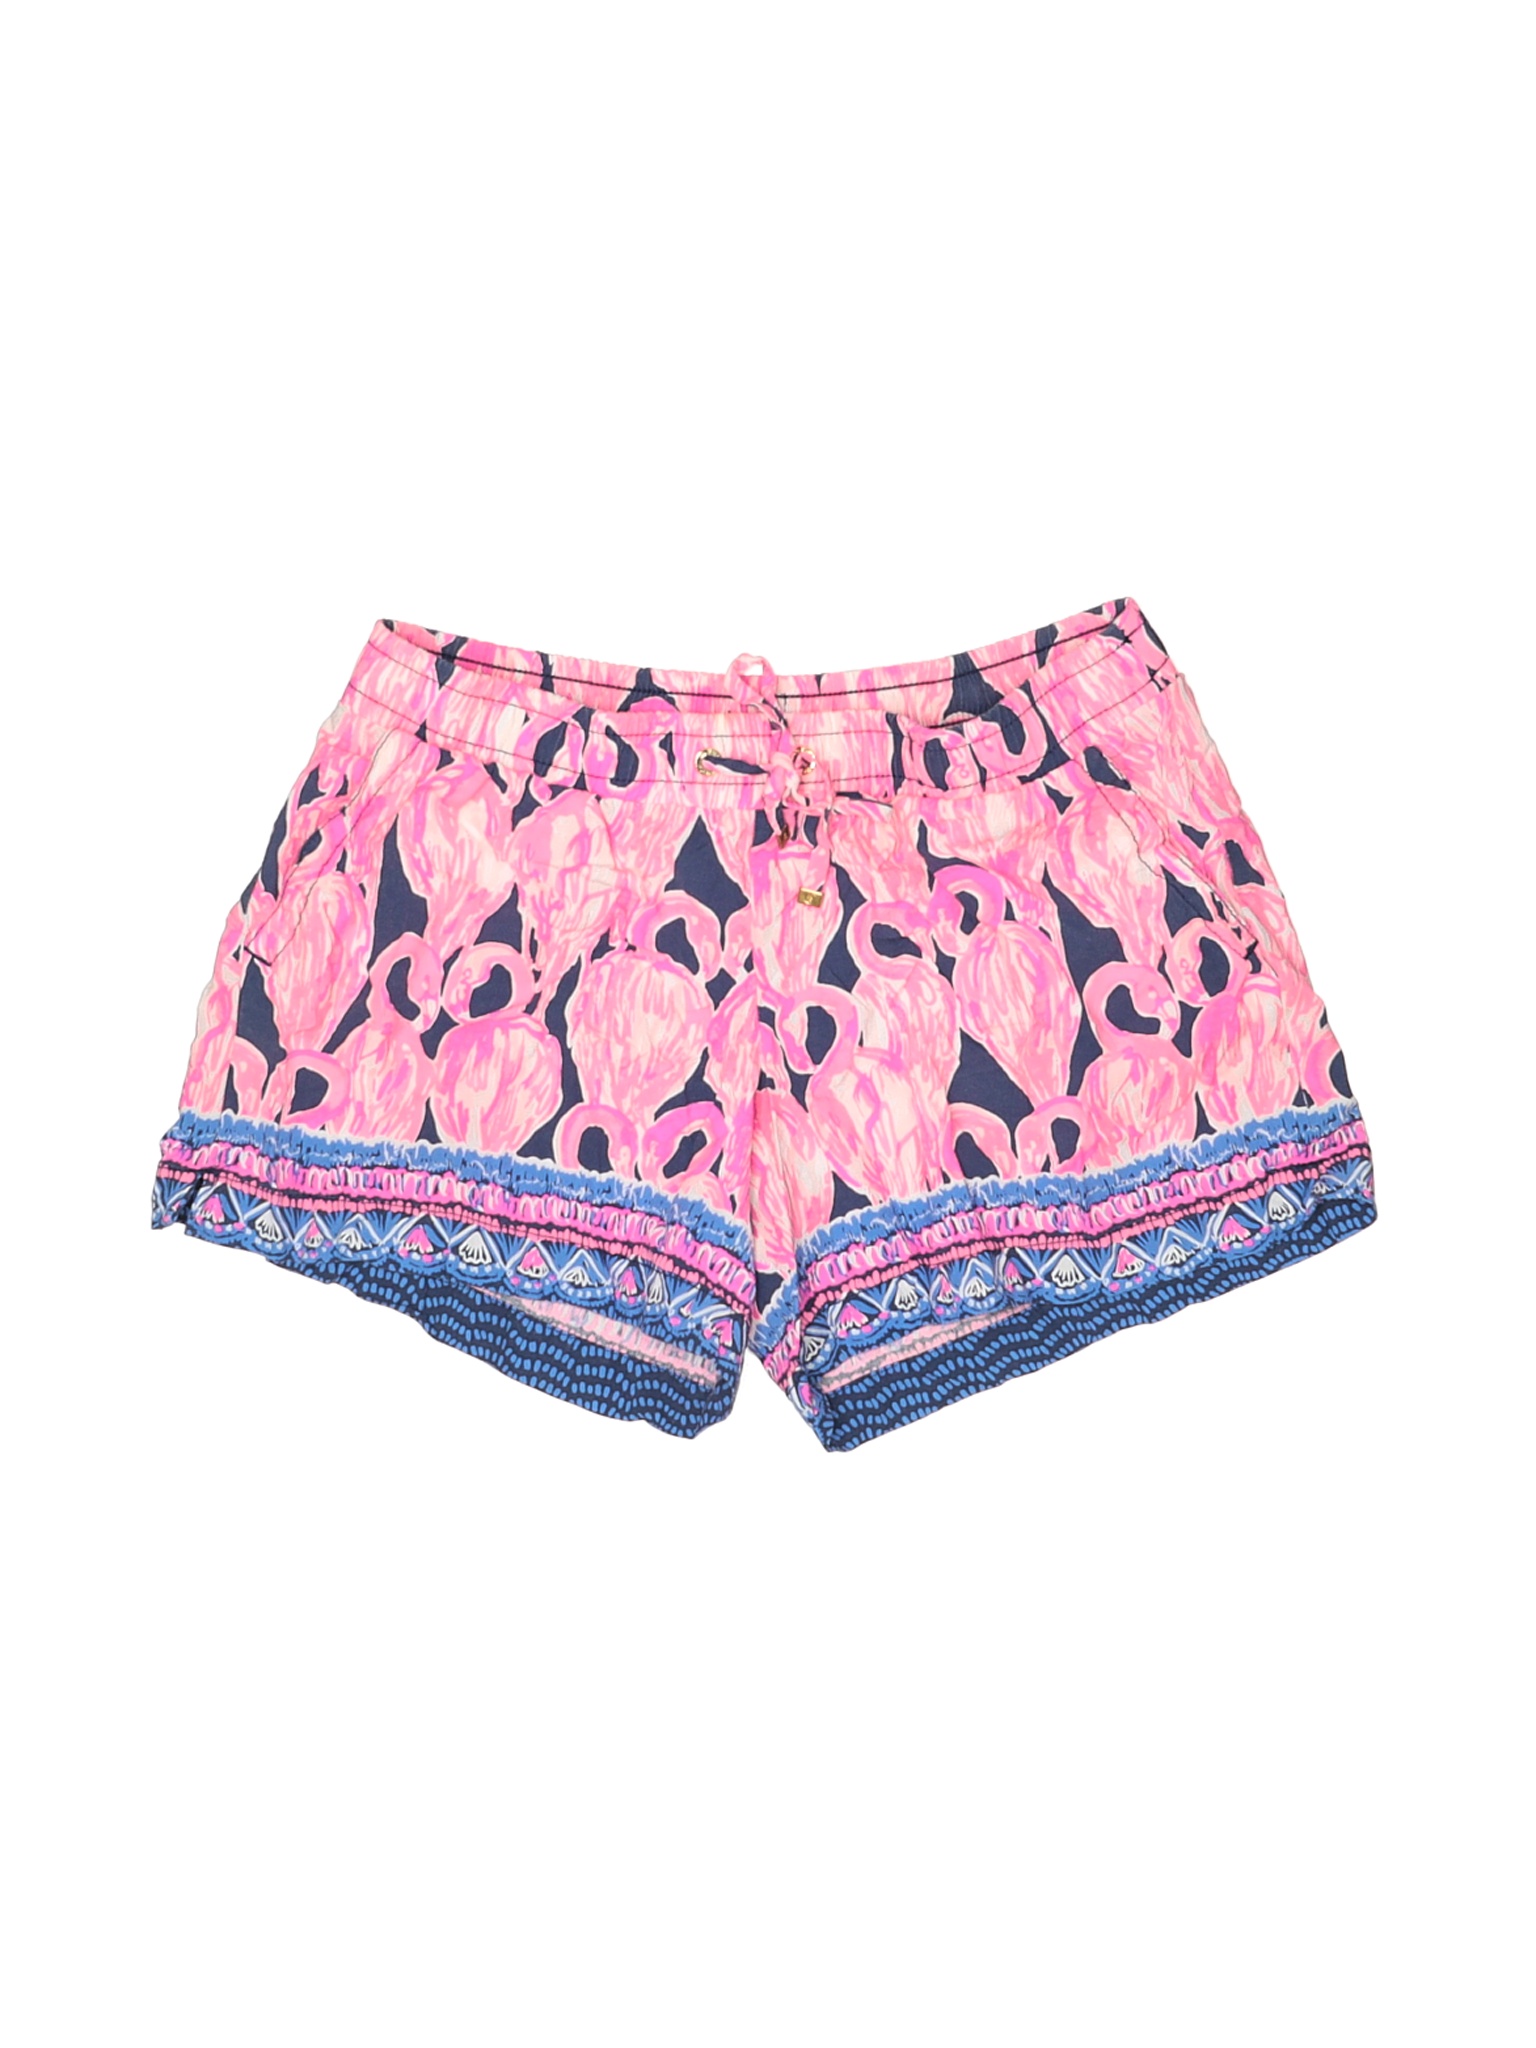 Lilly Pulitzer Women Pink Shorts XS | eBay